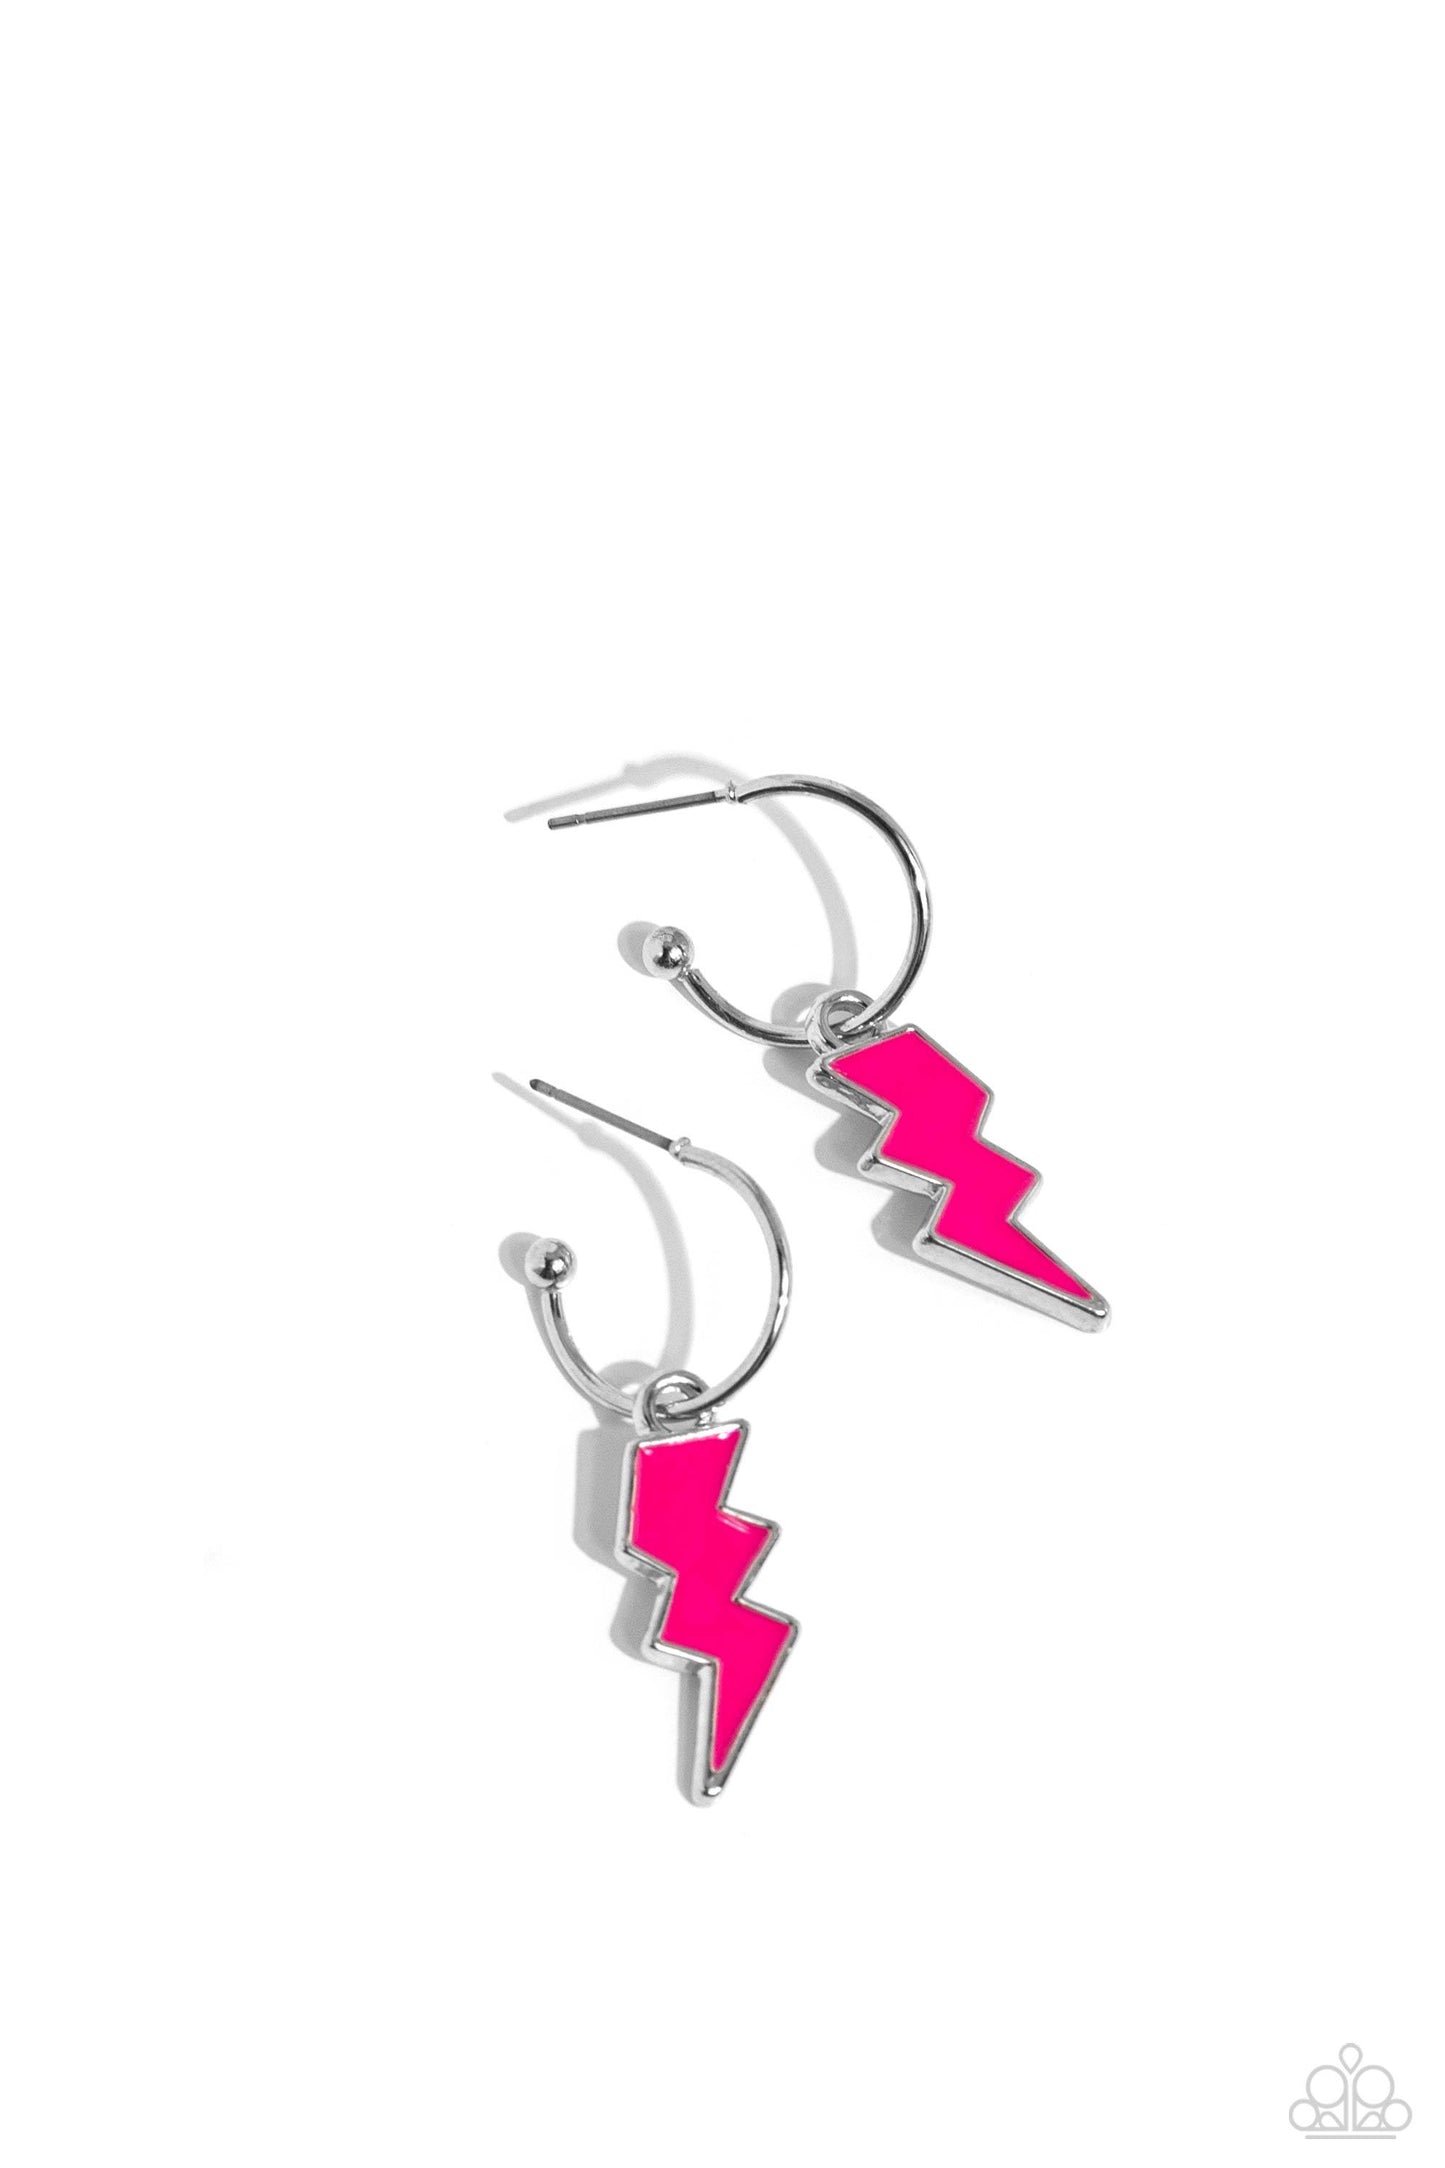 Paparazzi Accessories - Lightning Limit - Pink Earrings - Bling by JessieK